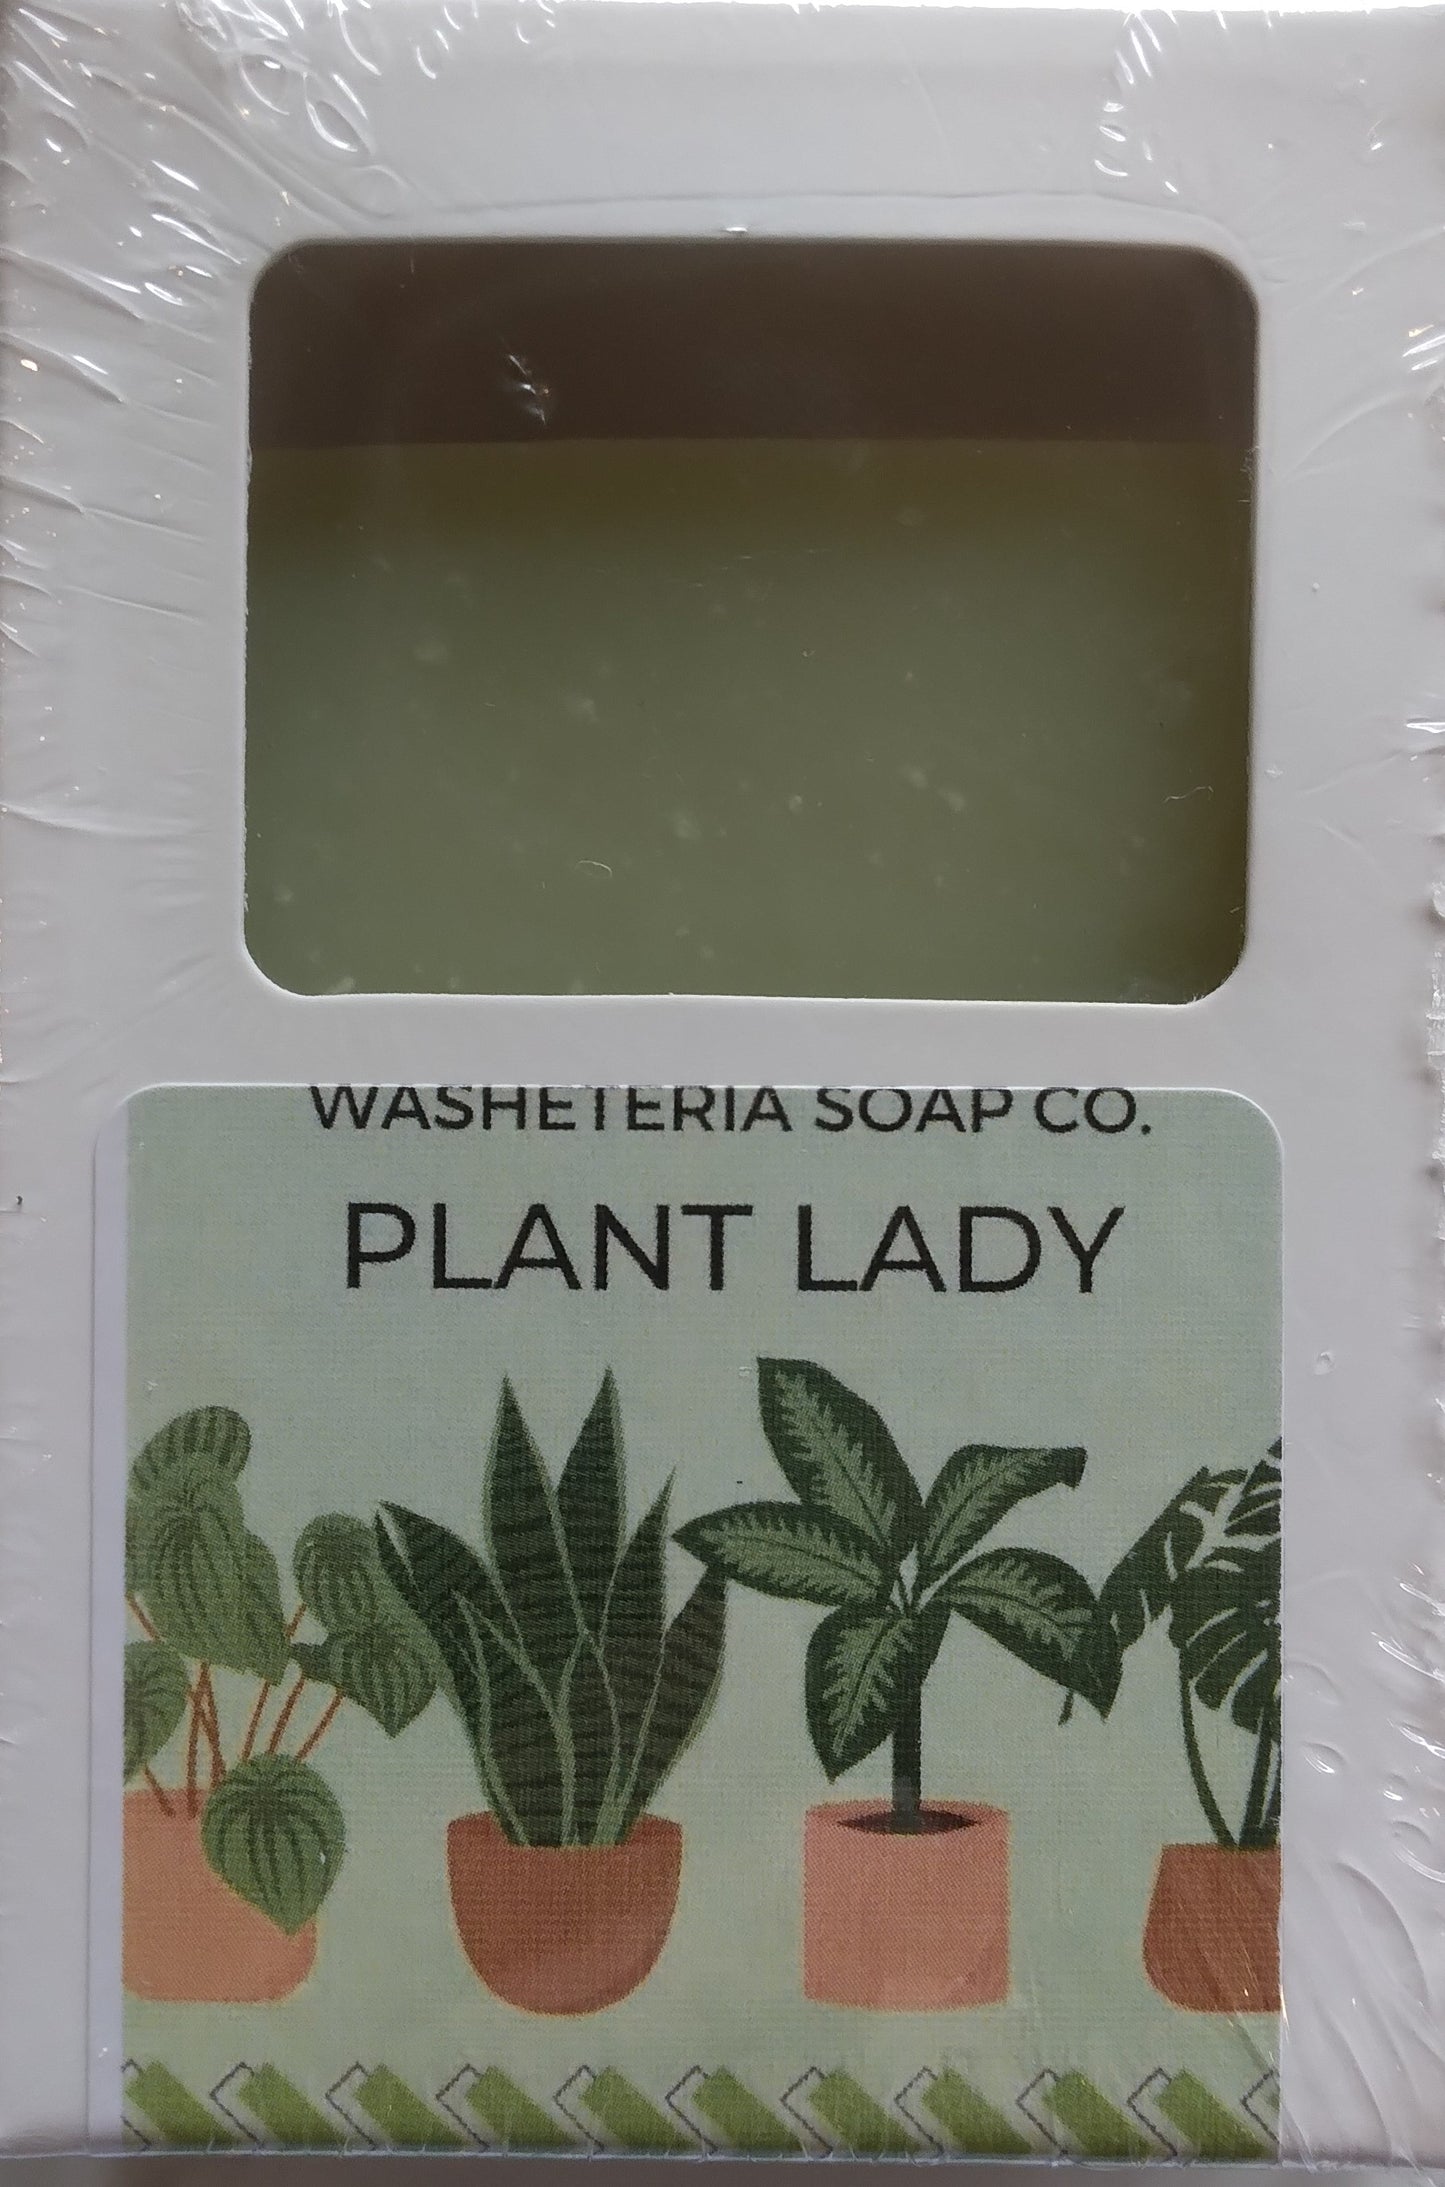 Washeteria Soap Co. - Plant Lady Soap